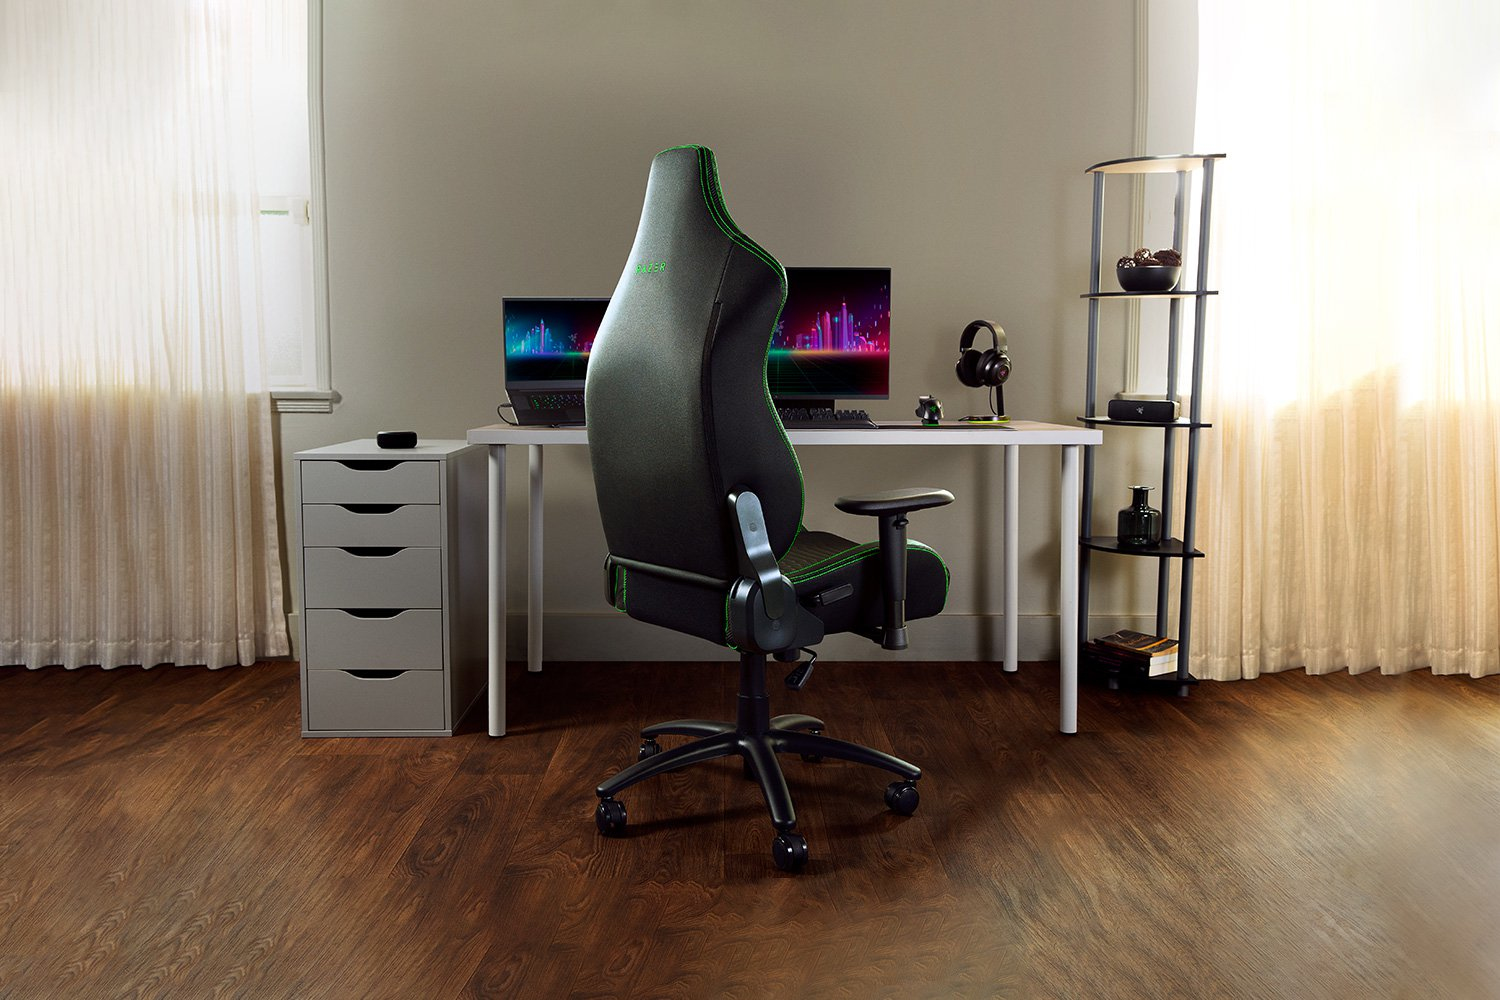 Ergonomic Gaming Chair - Razer Iskur X-XL